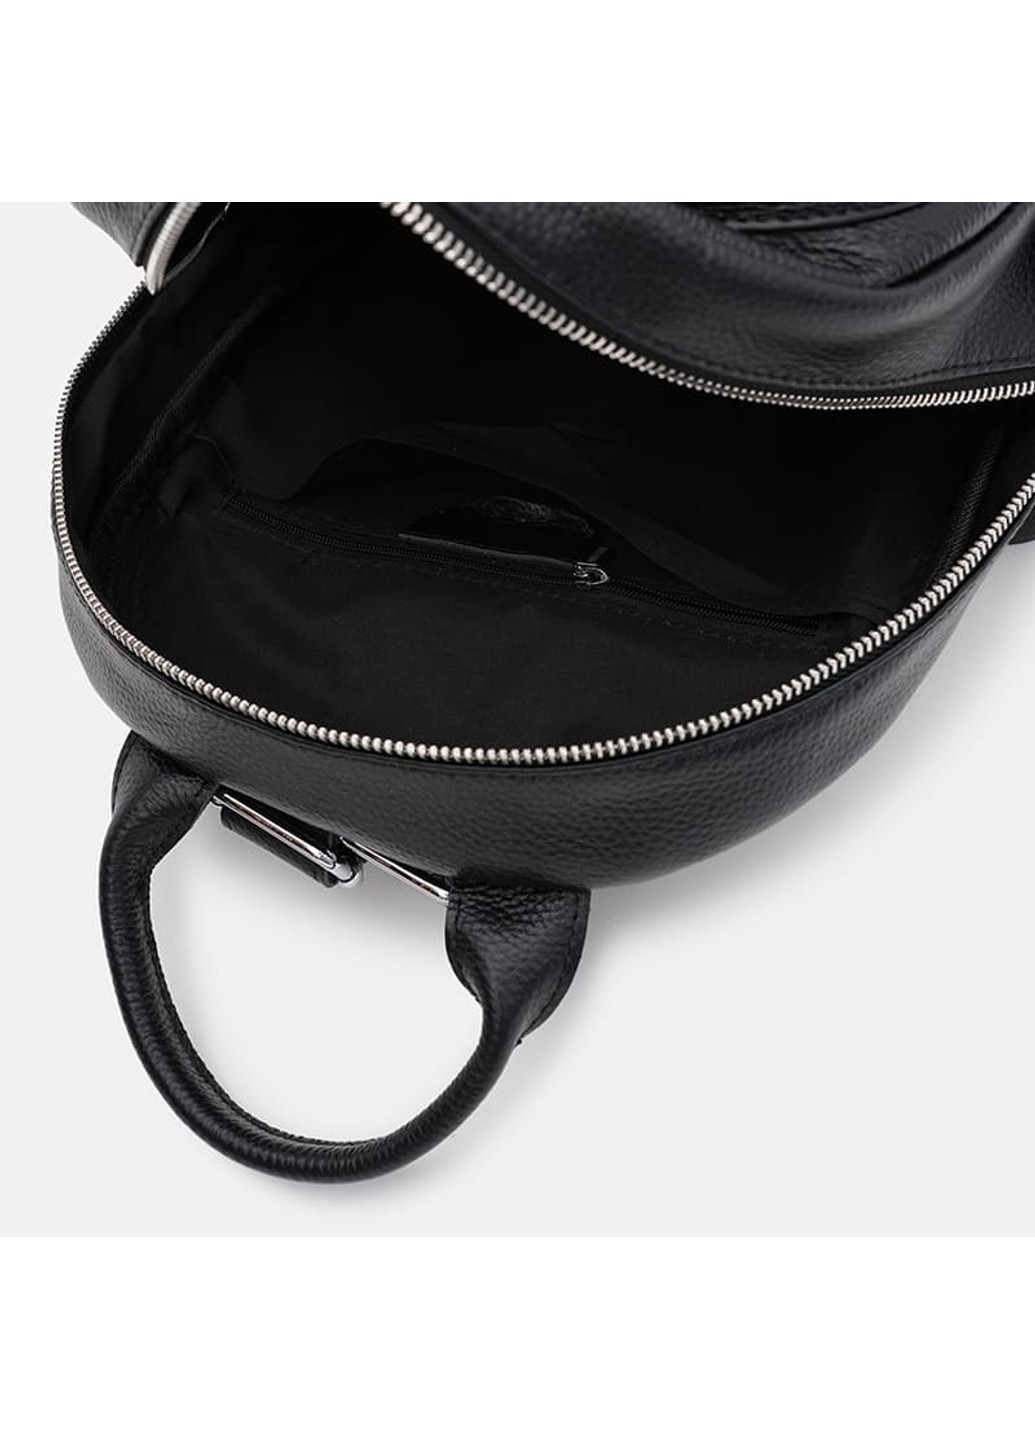 Женский кожаный рюкзак K18885bl-black Ricco Grande (271665116)